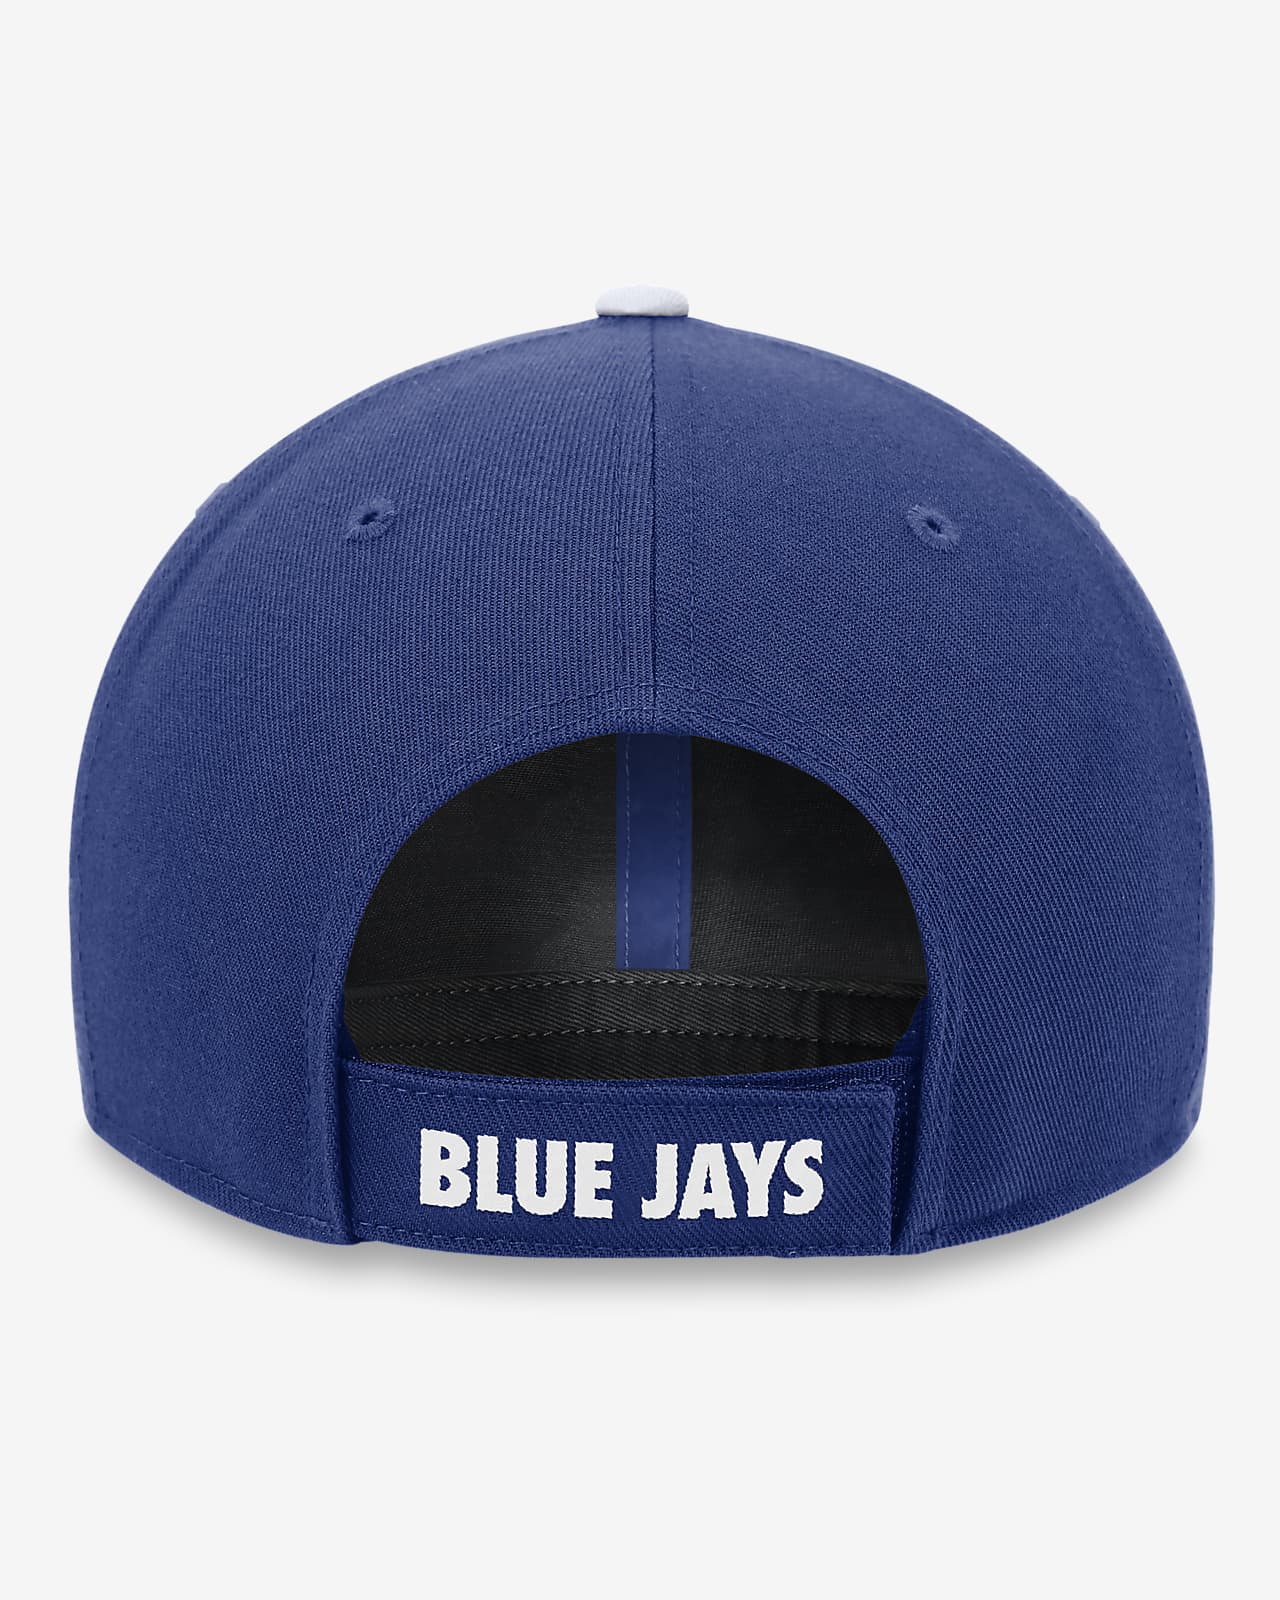 Mens Blue Jays Knit Hat, Toronto Blue Jays Mens Beanies, Winter Hats